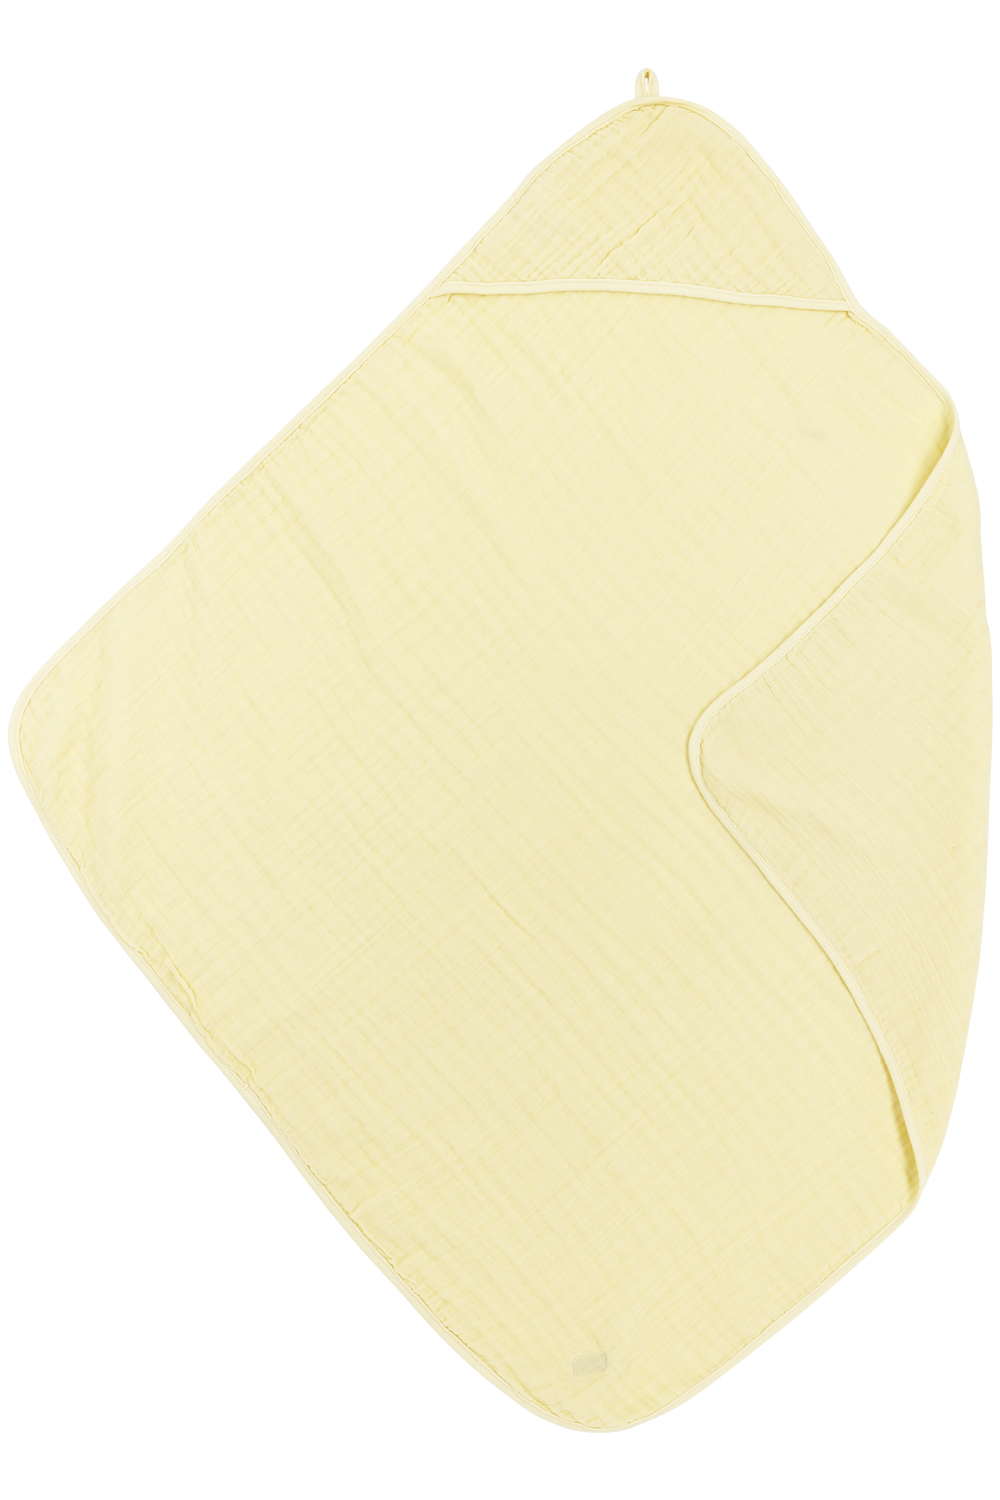 Bathcape muslin Uni - soft yellow - 80x80cm